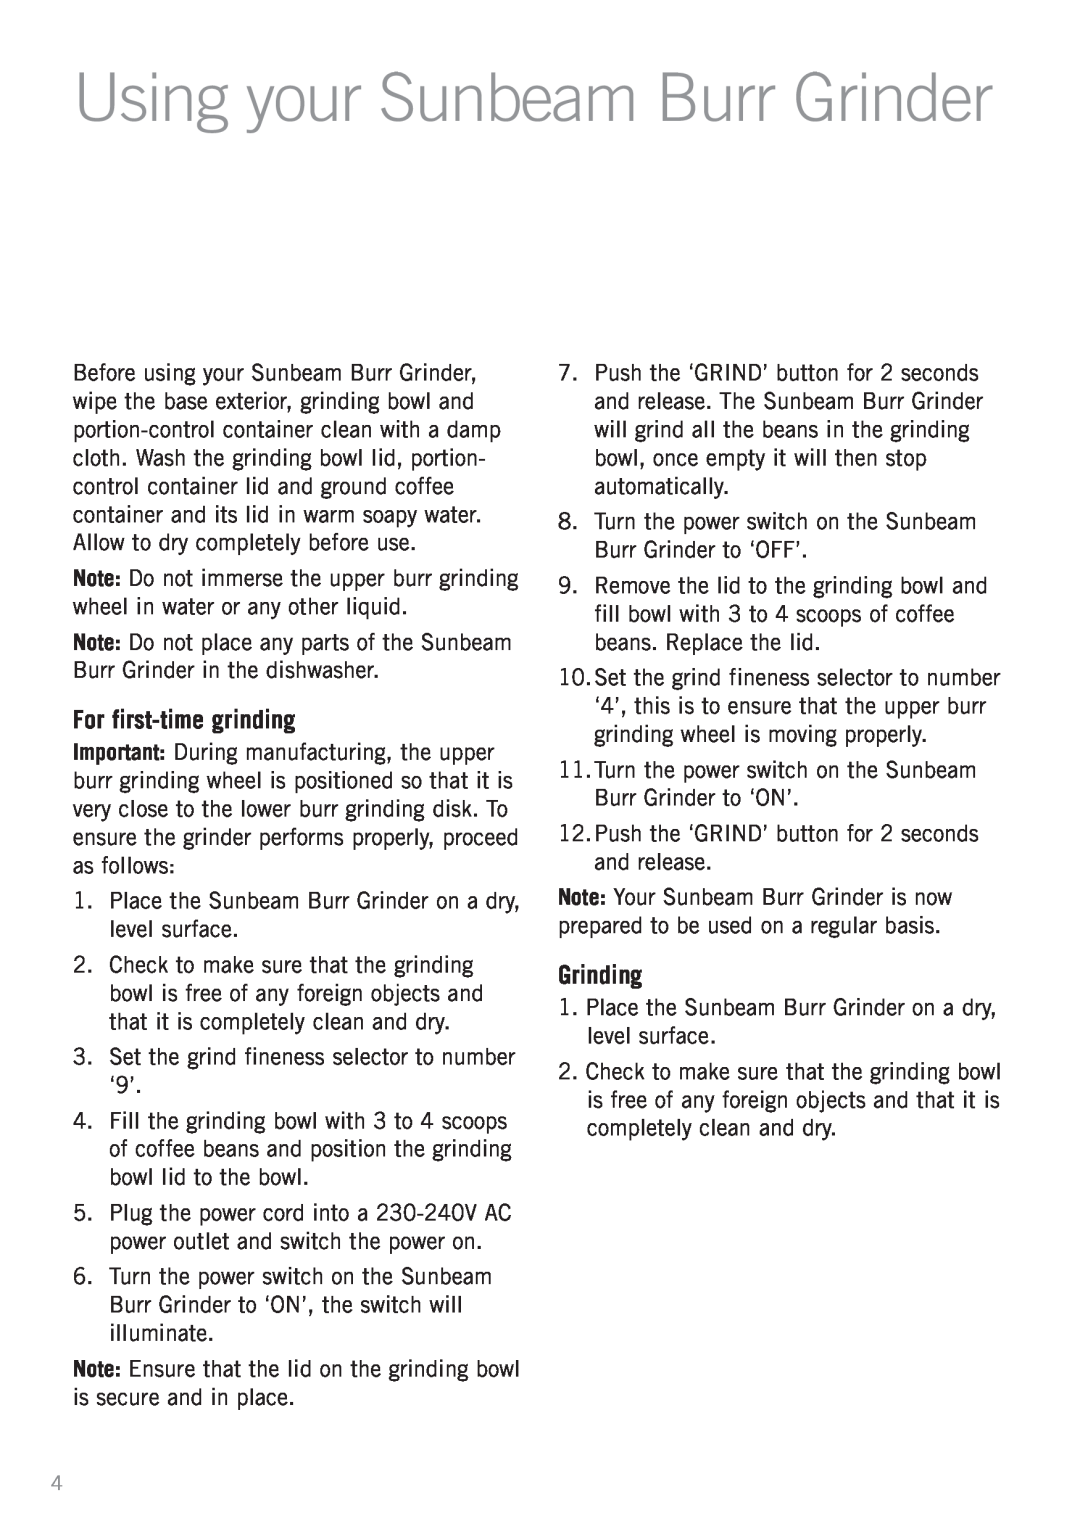 Sunbeam EM0430 manual Using your Sunbeam Burr Grinder, For first-timegrinding, Grinding 